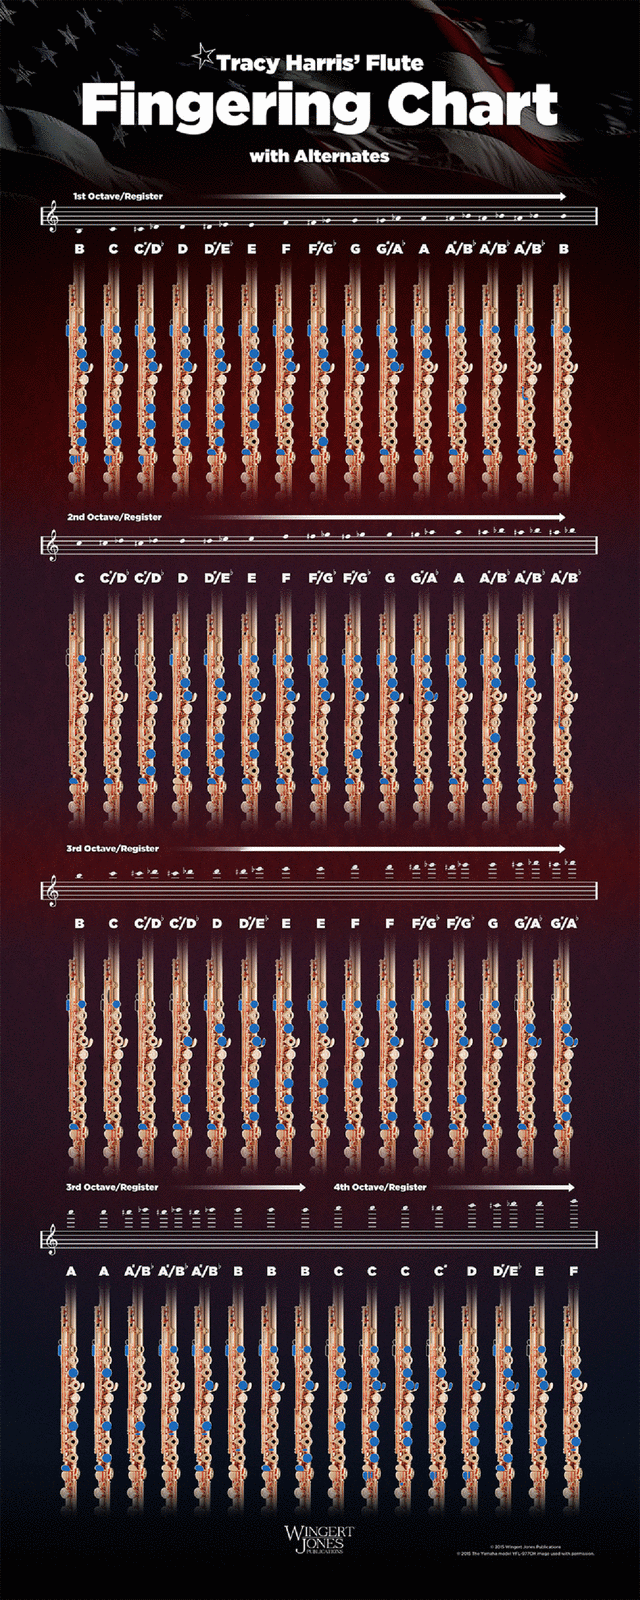 Flute Fingering Chart - Small 9 X 20